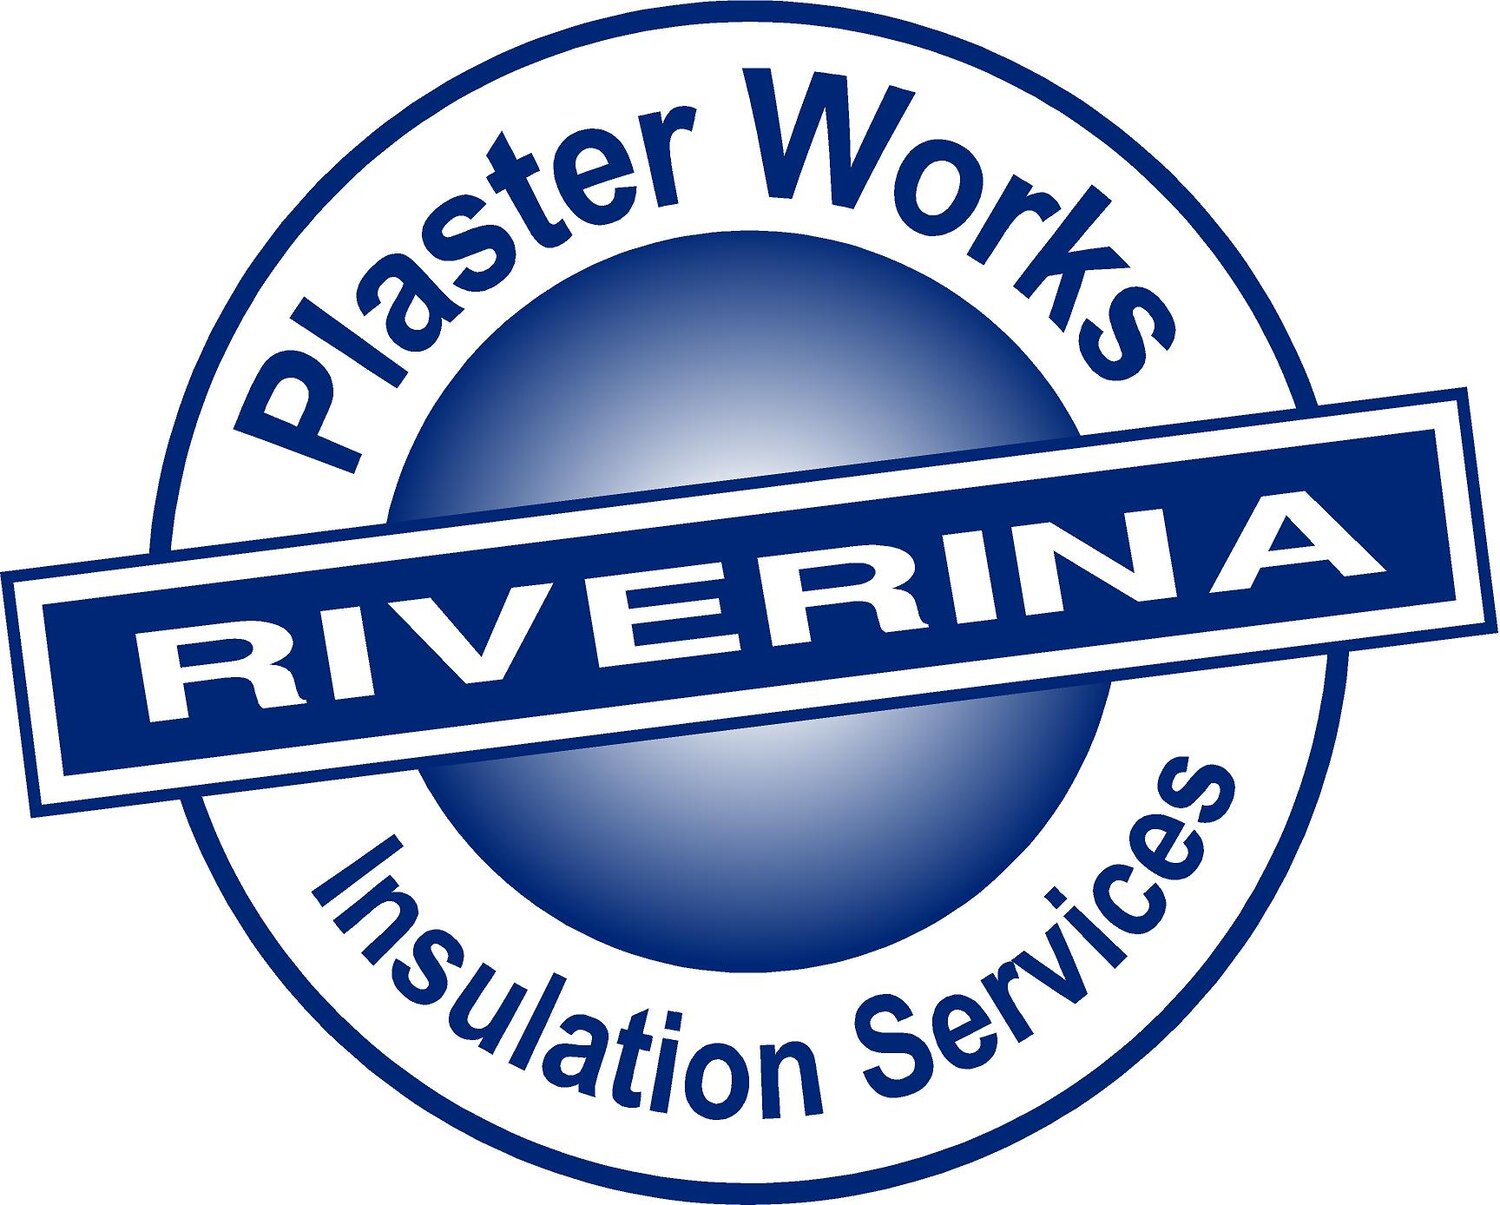 Riverina Plaster Works & Insulation Services